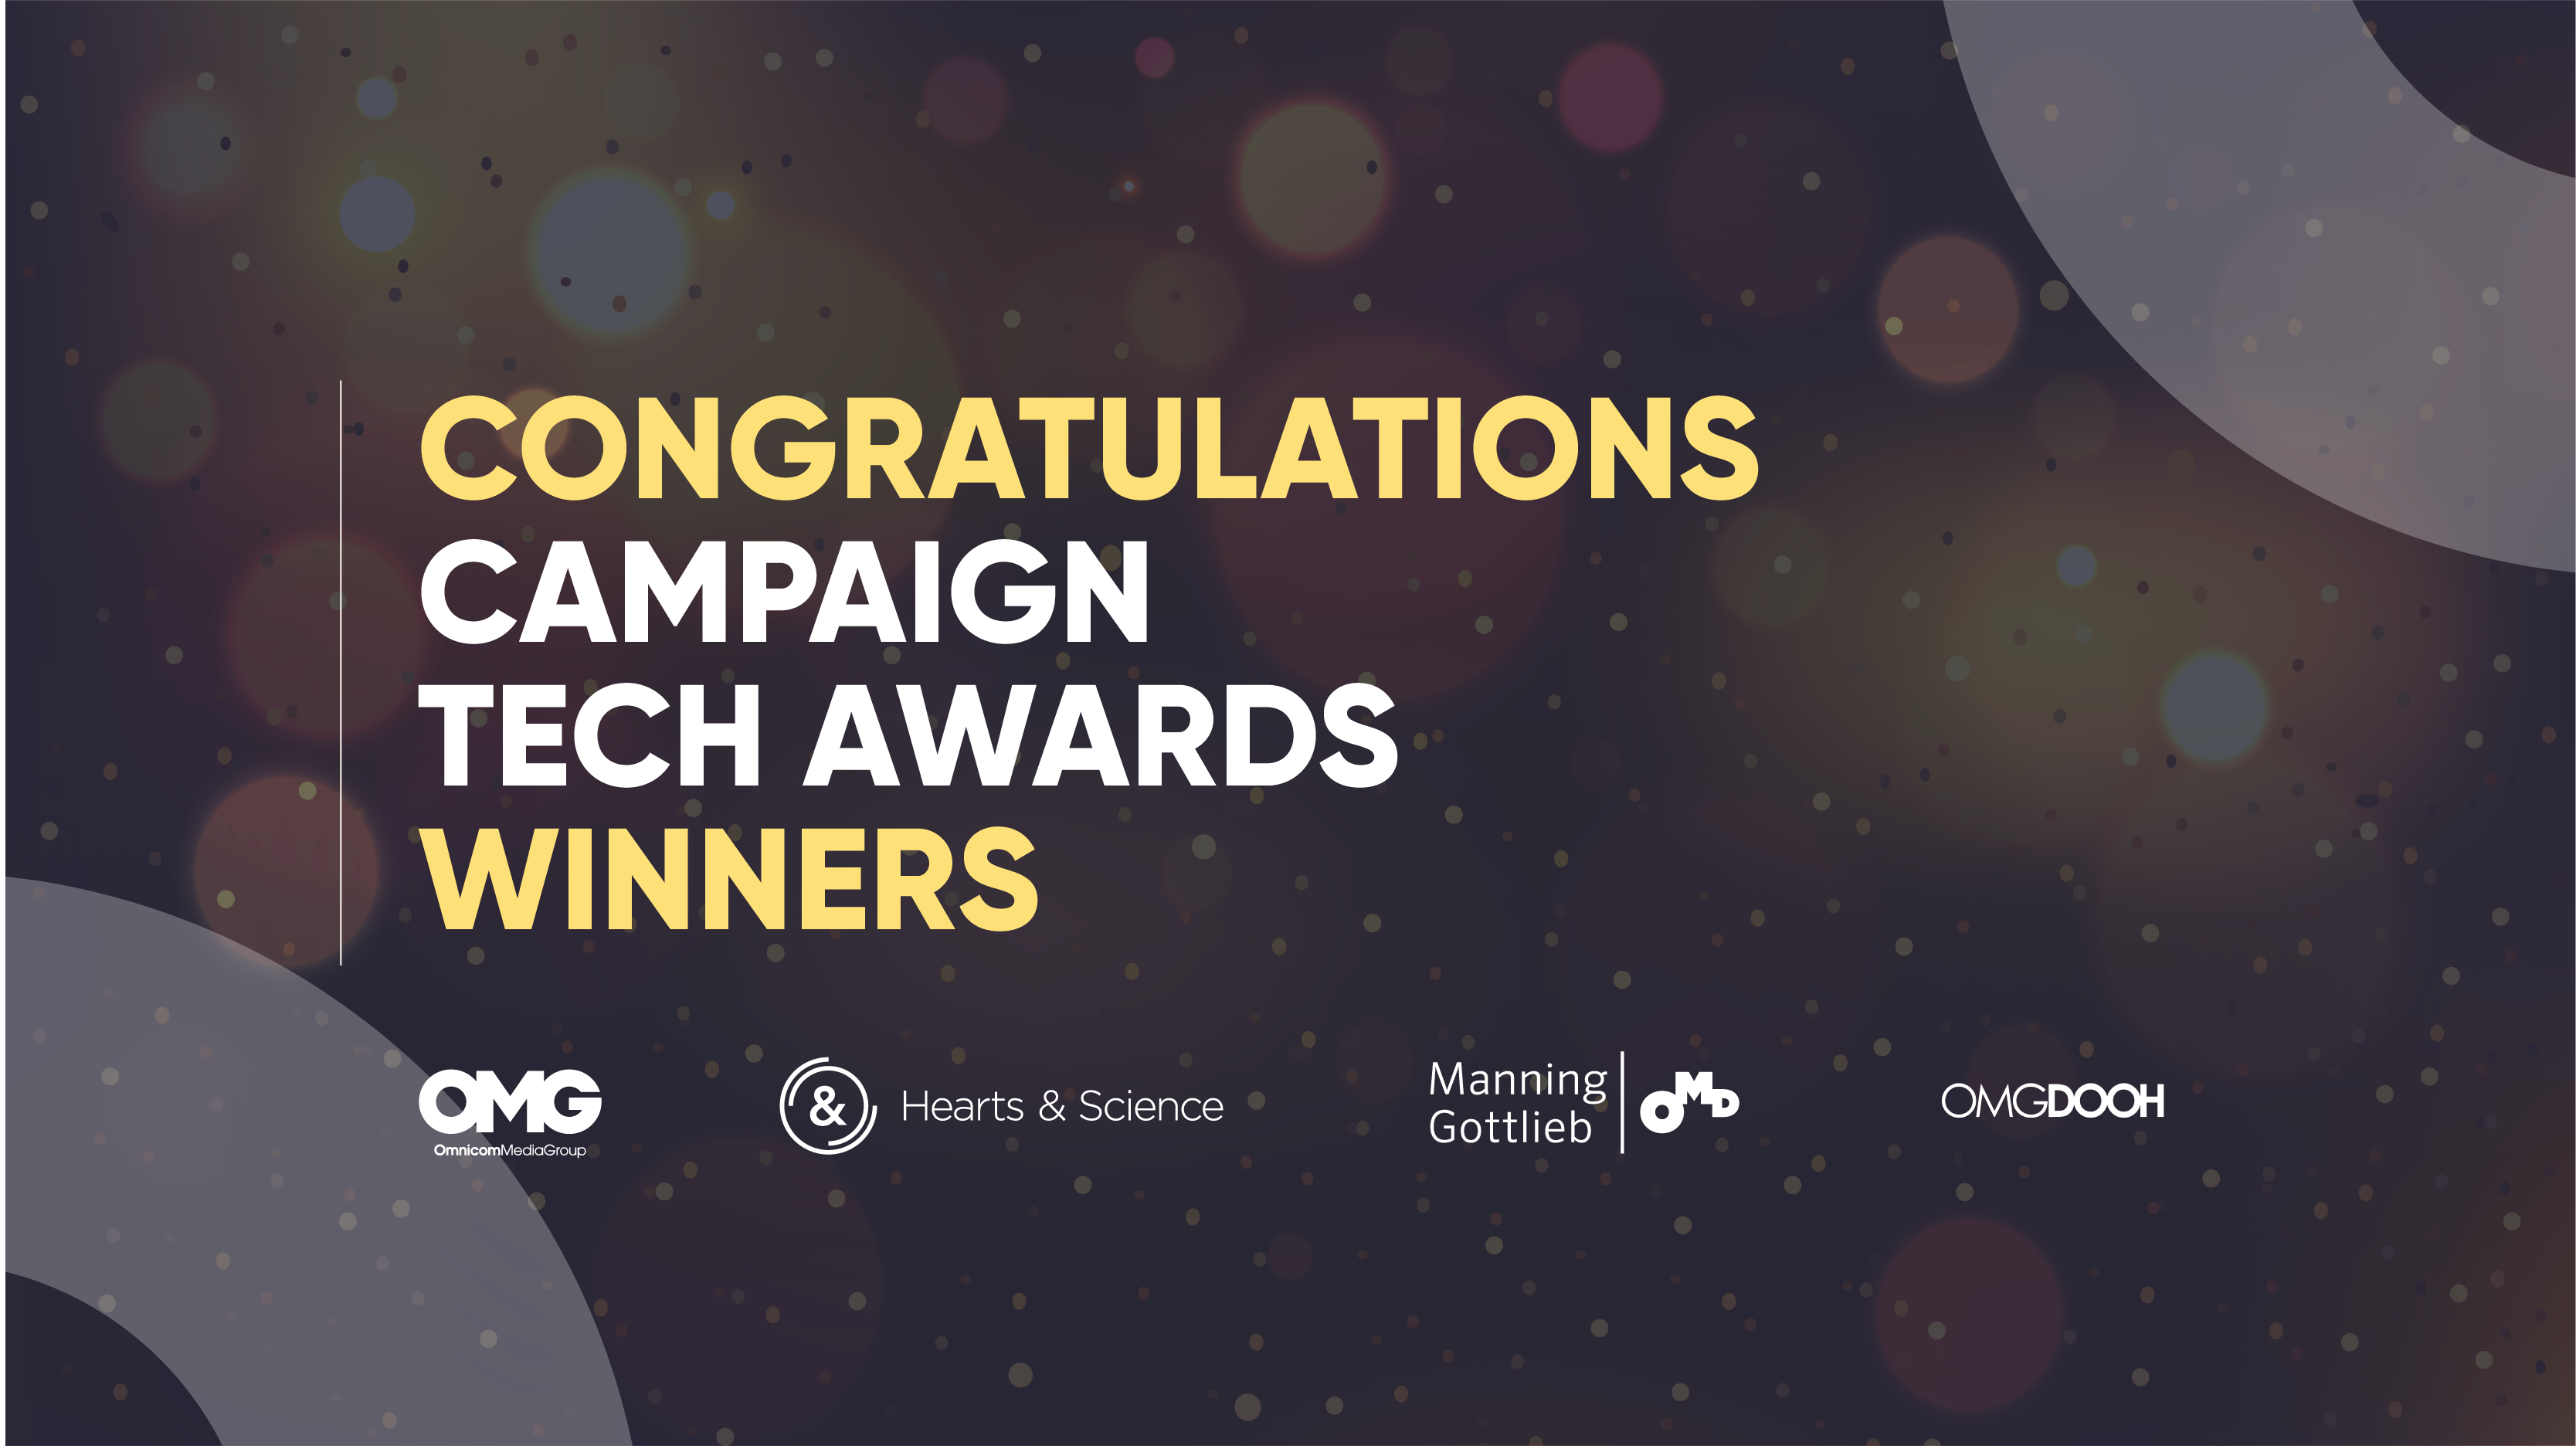 OMG UK agencies among Campaign Tech Awards winners - Omnicom Media Group